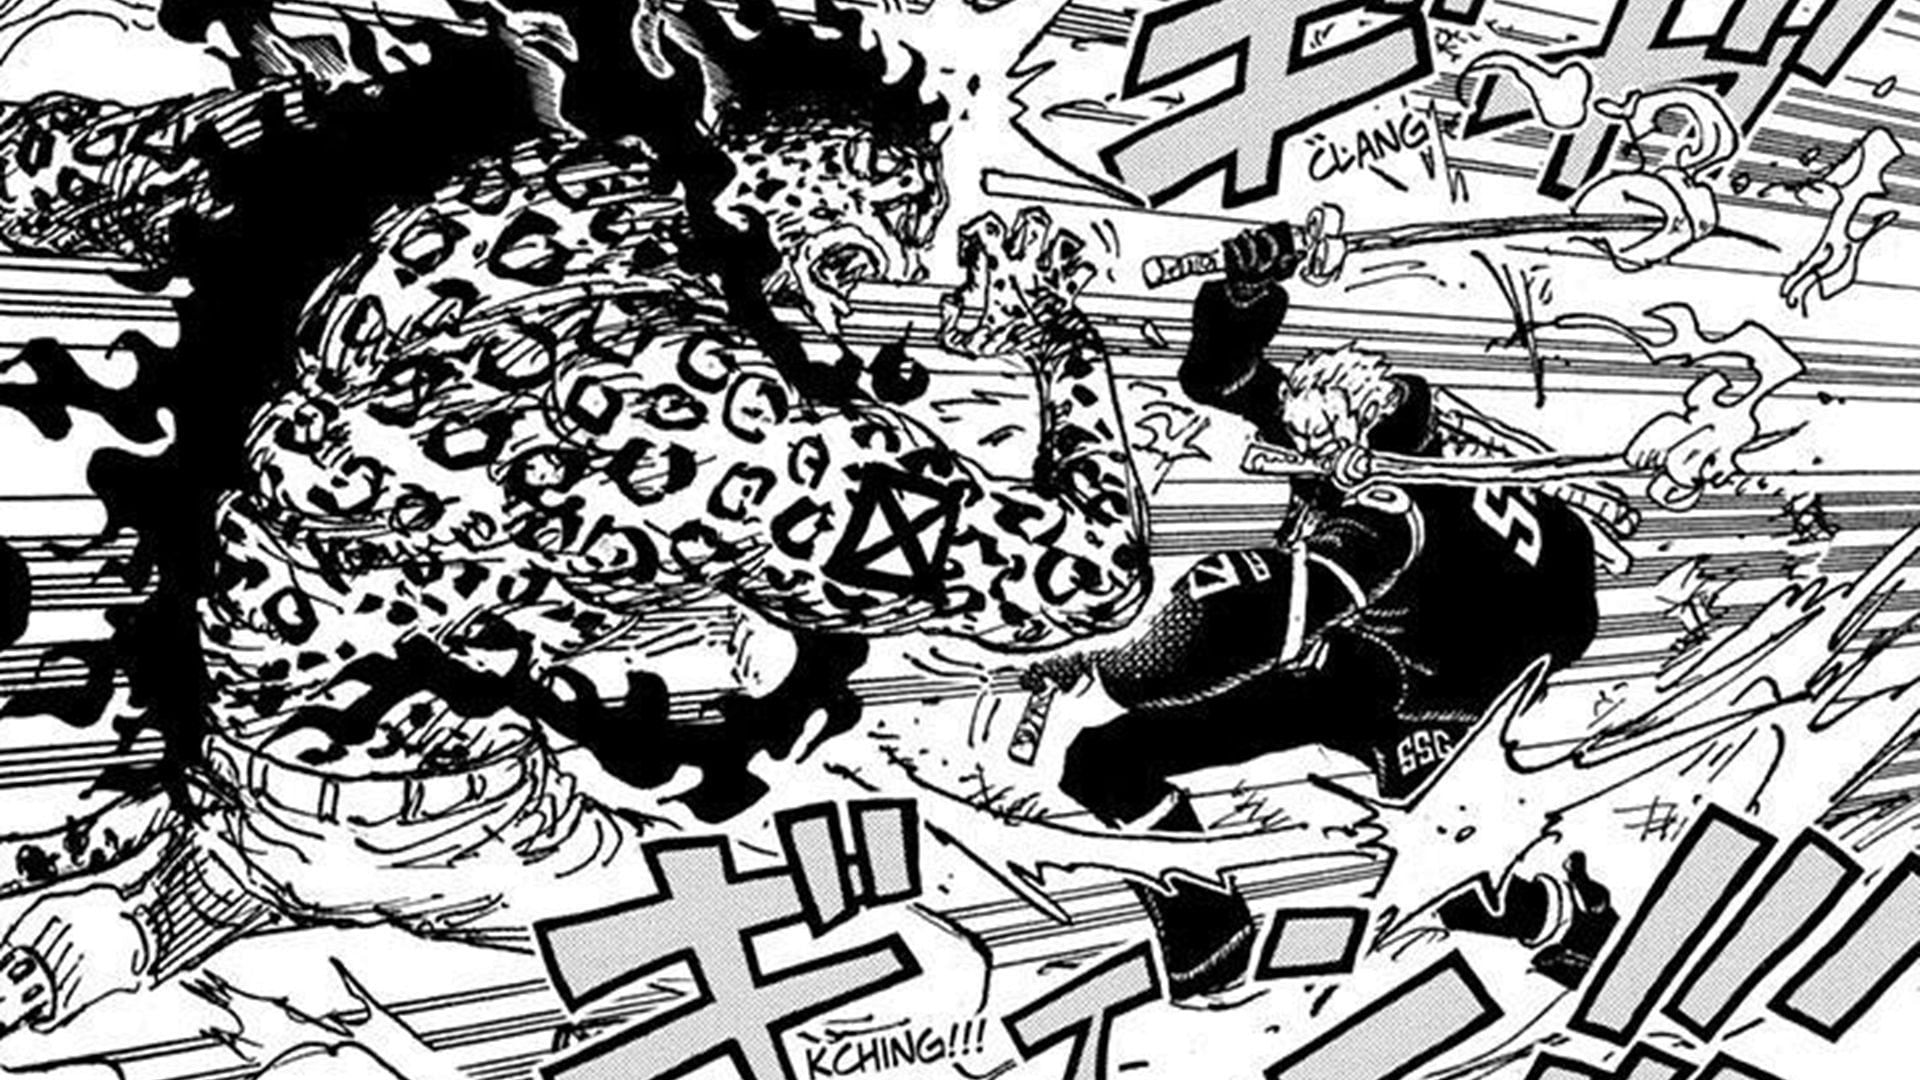 Zoro vs Lucci in One Piece chapter 1093 (Image via Shueisha)